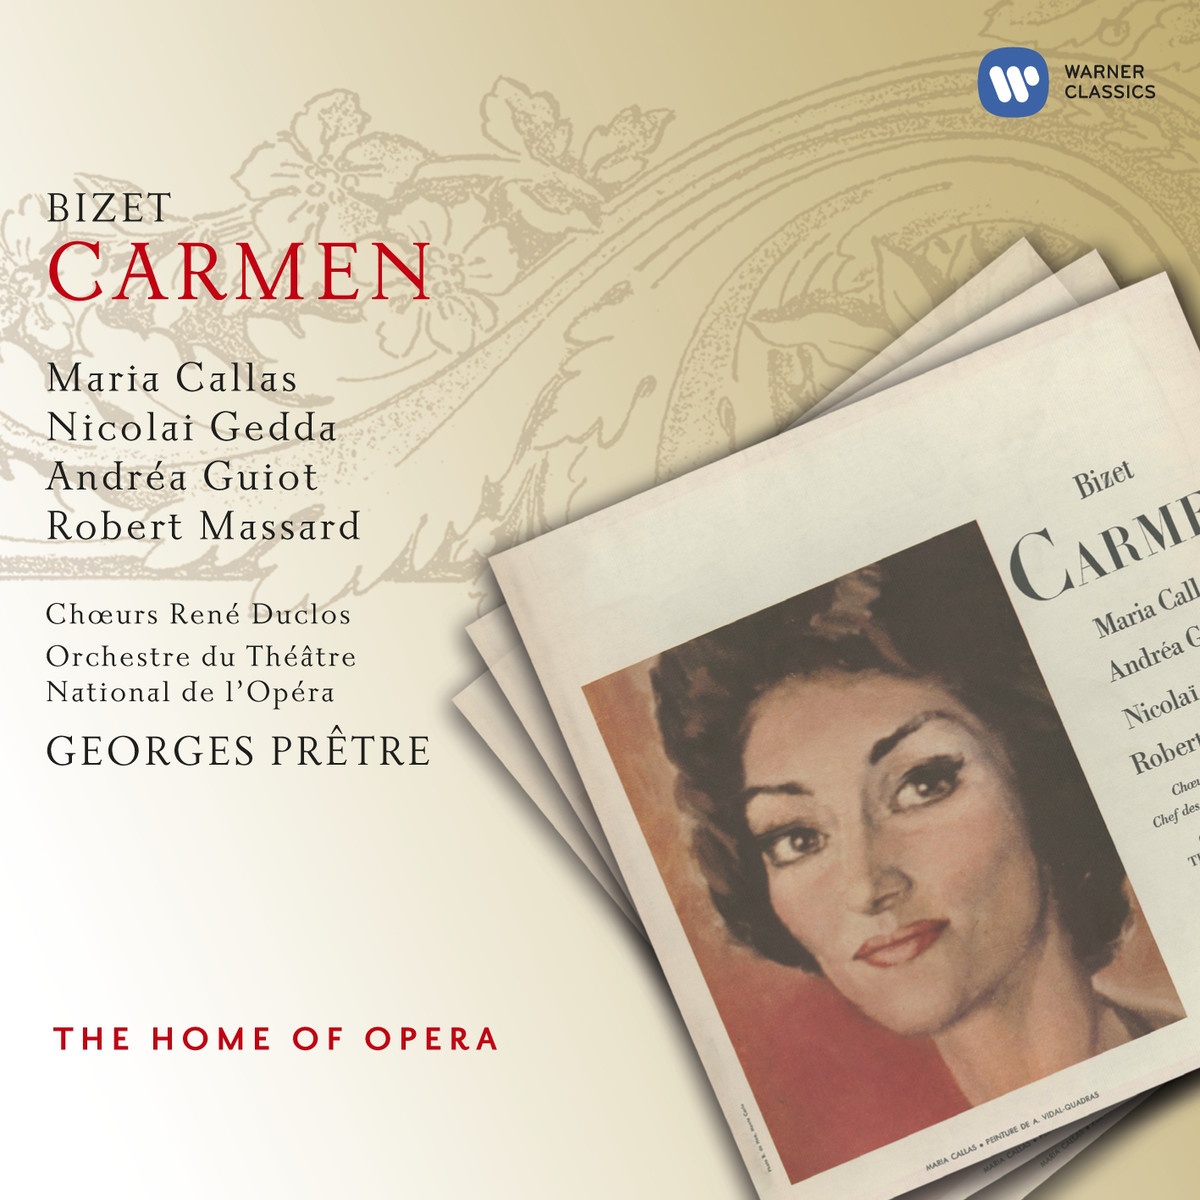 Carmen 1997 Digital Remaster, Act 1: Duo: Parlemoi de ma me re!